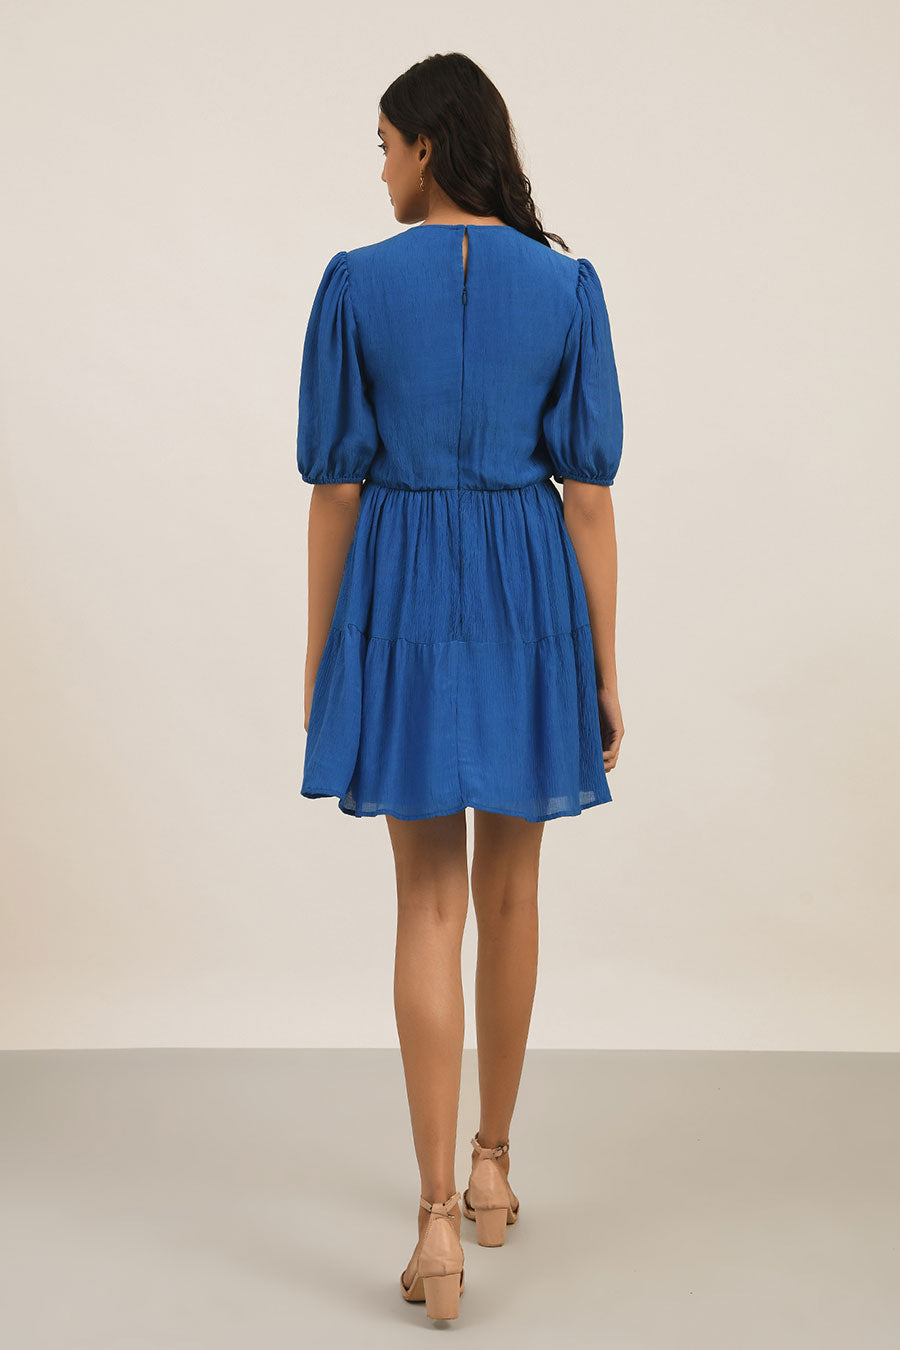 Blue Tier Dress